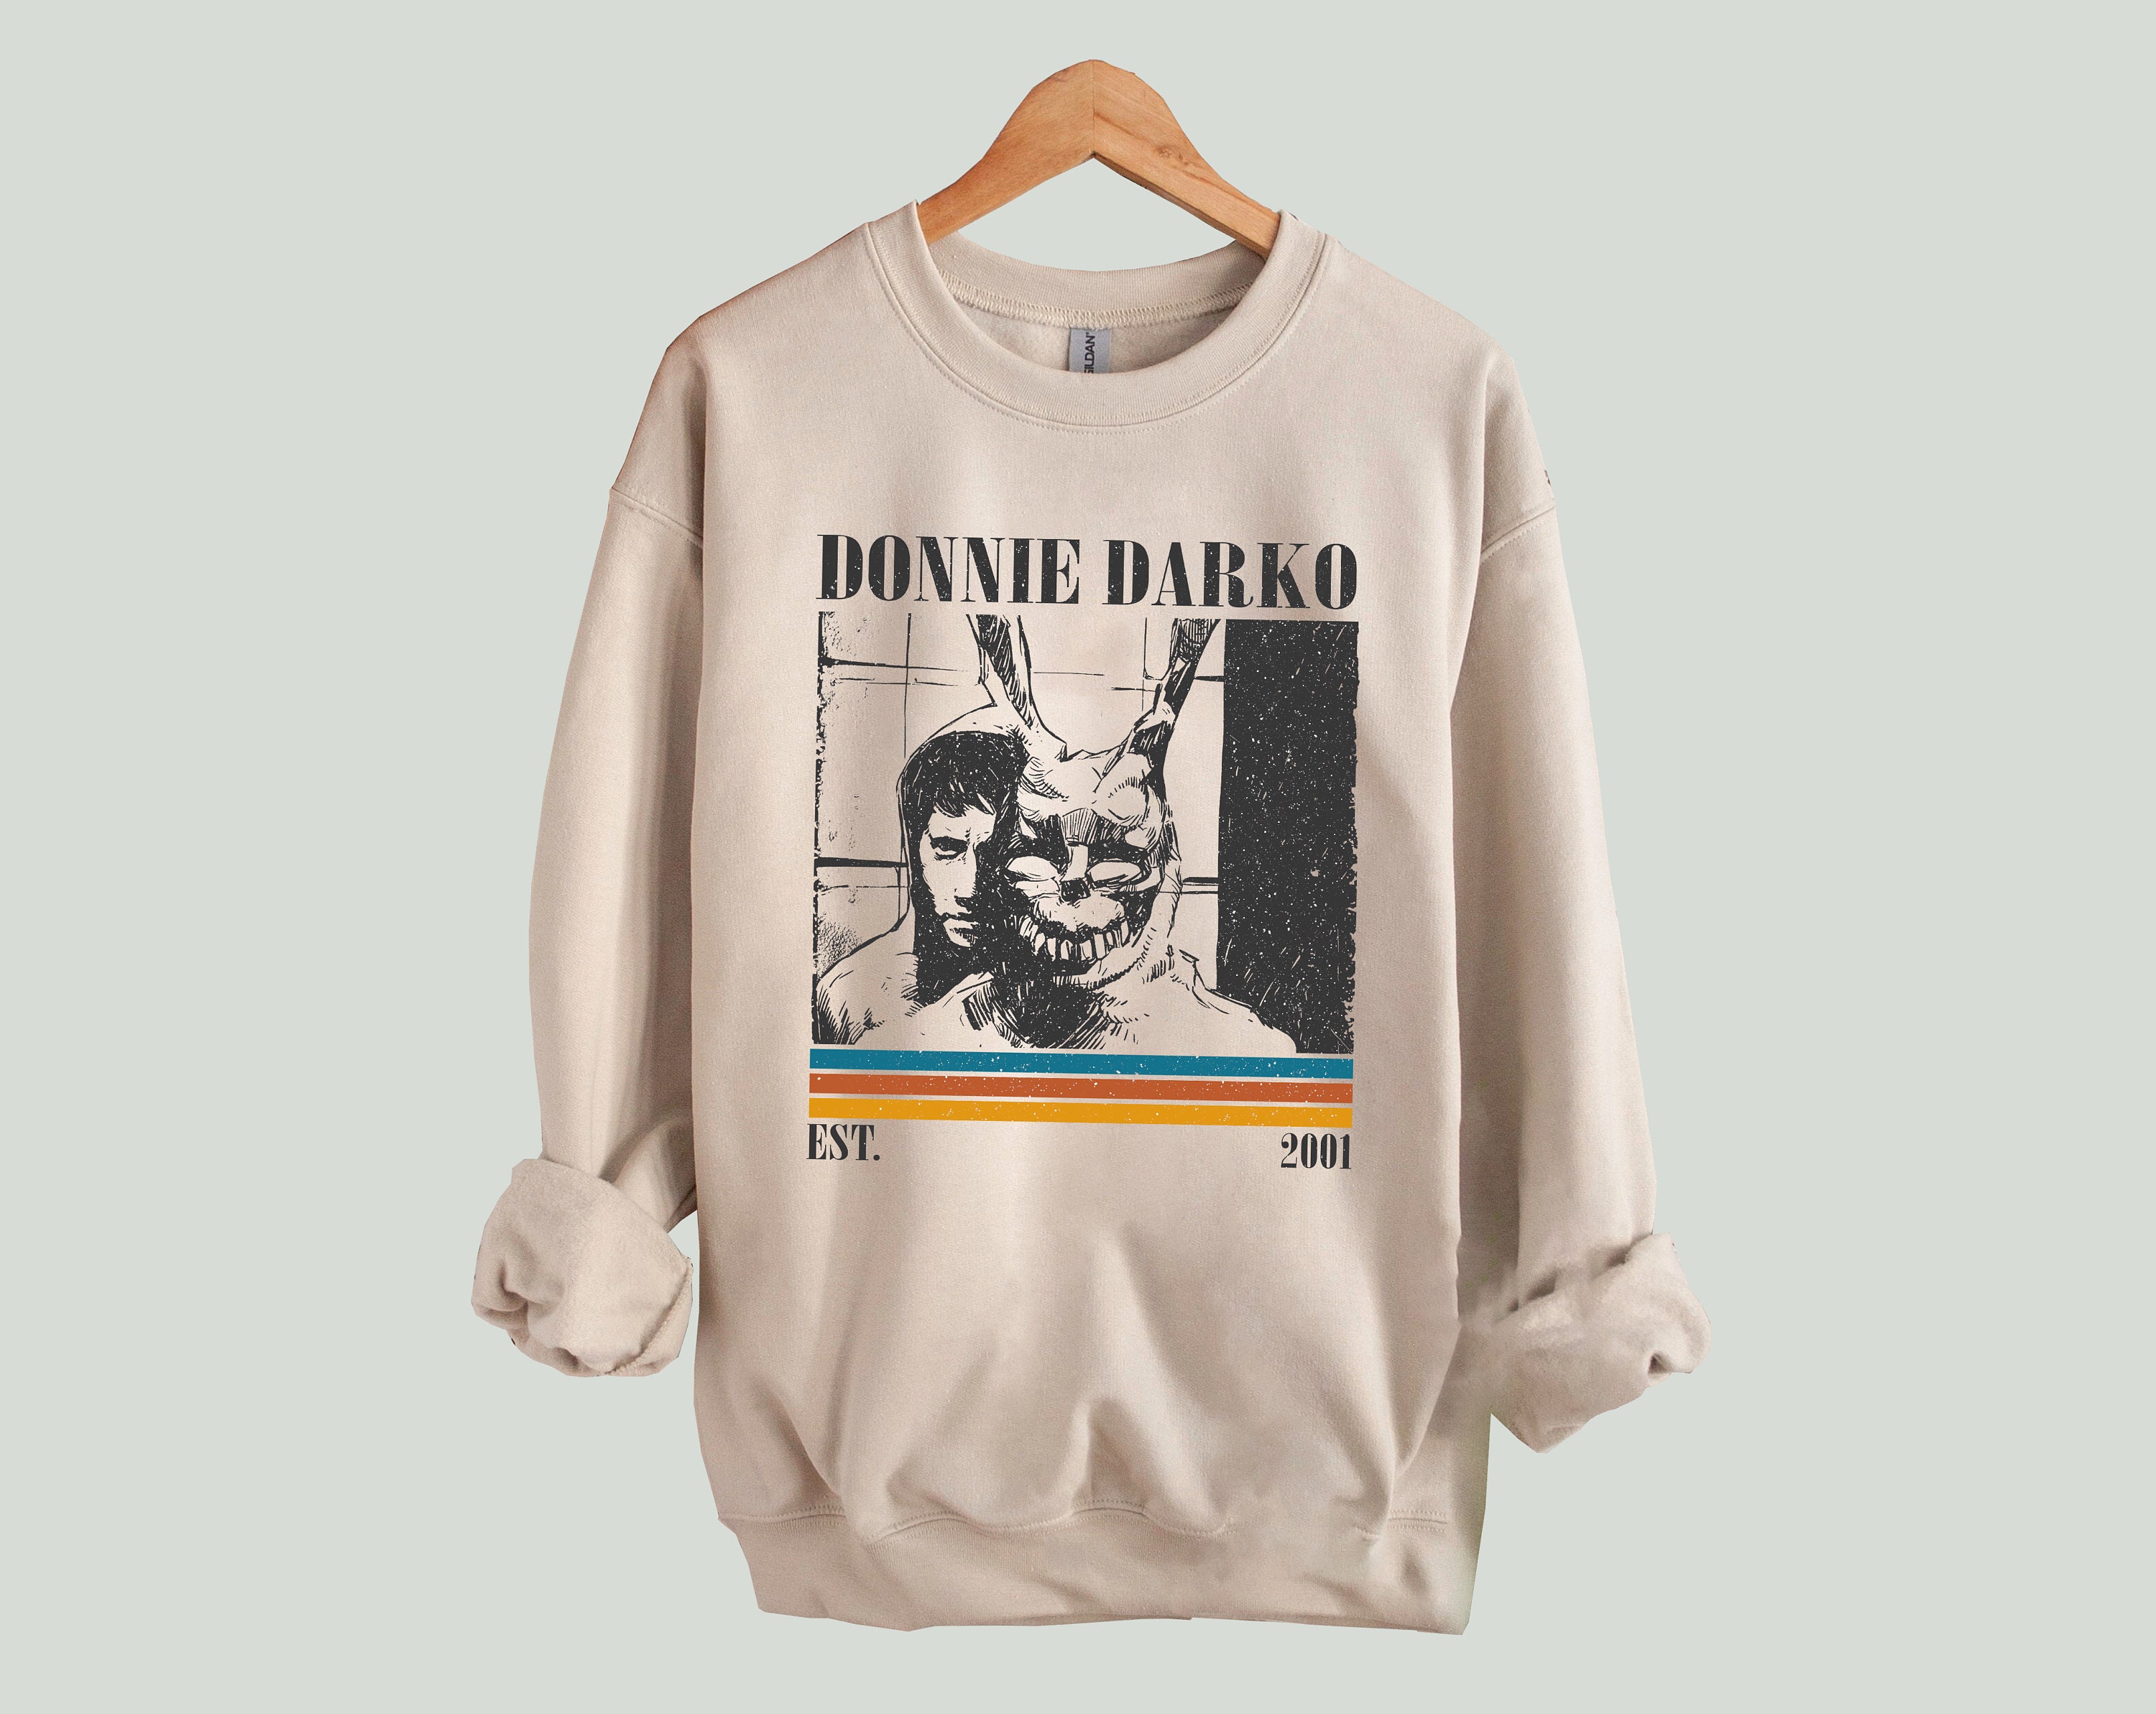 Cellar Door Donnie Darko Essential T-Shirt for Sale by thetshirtworks